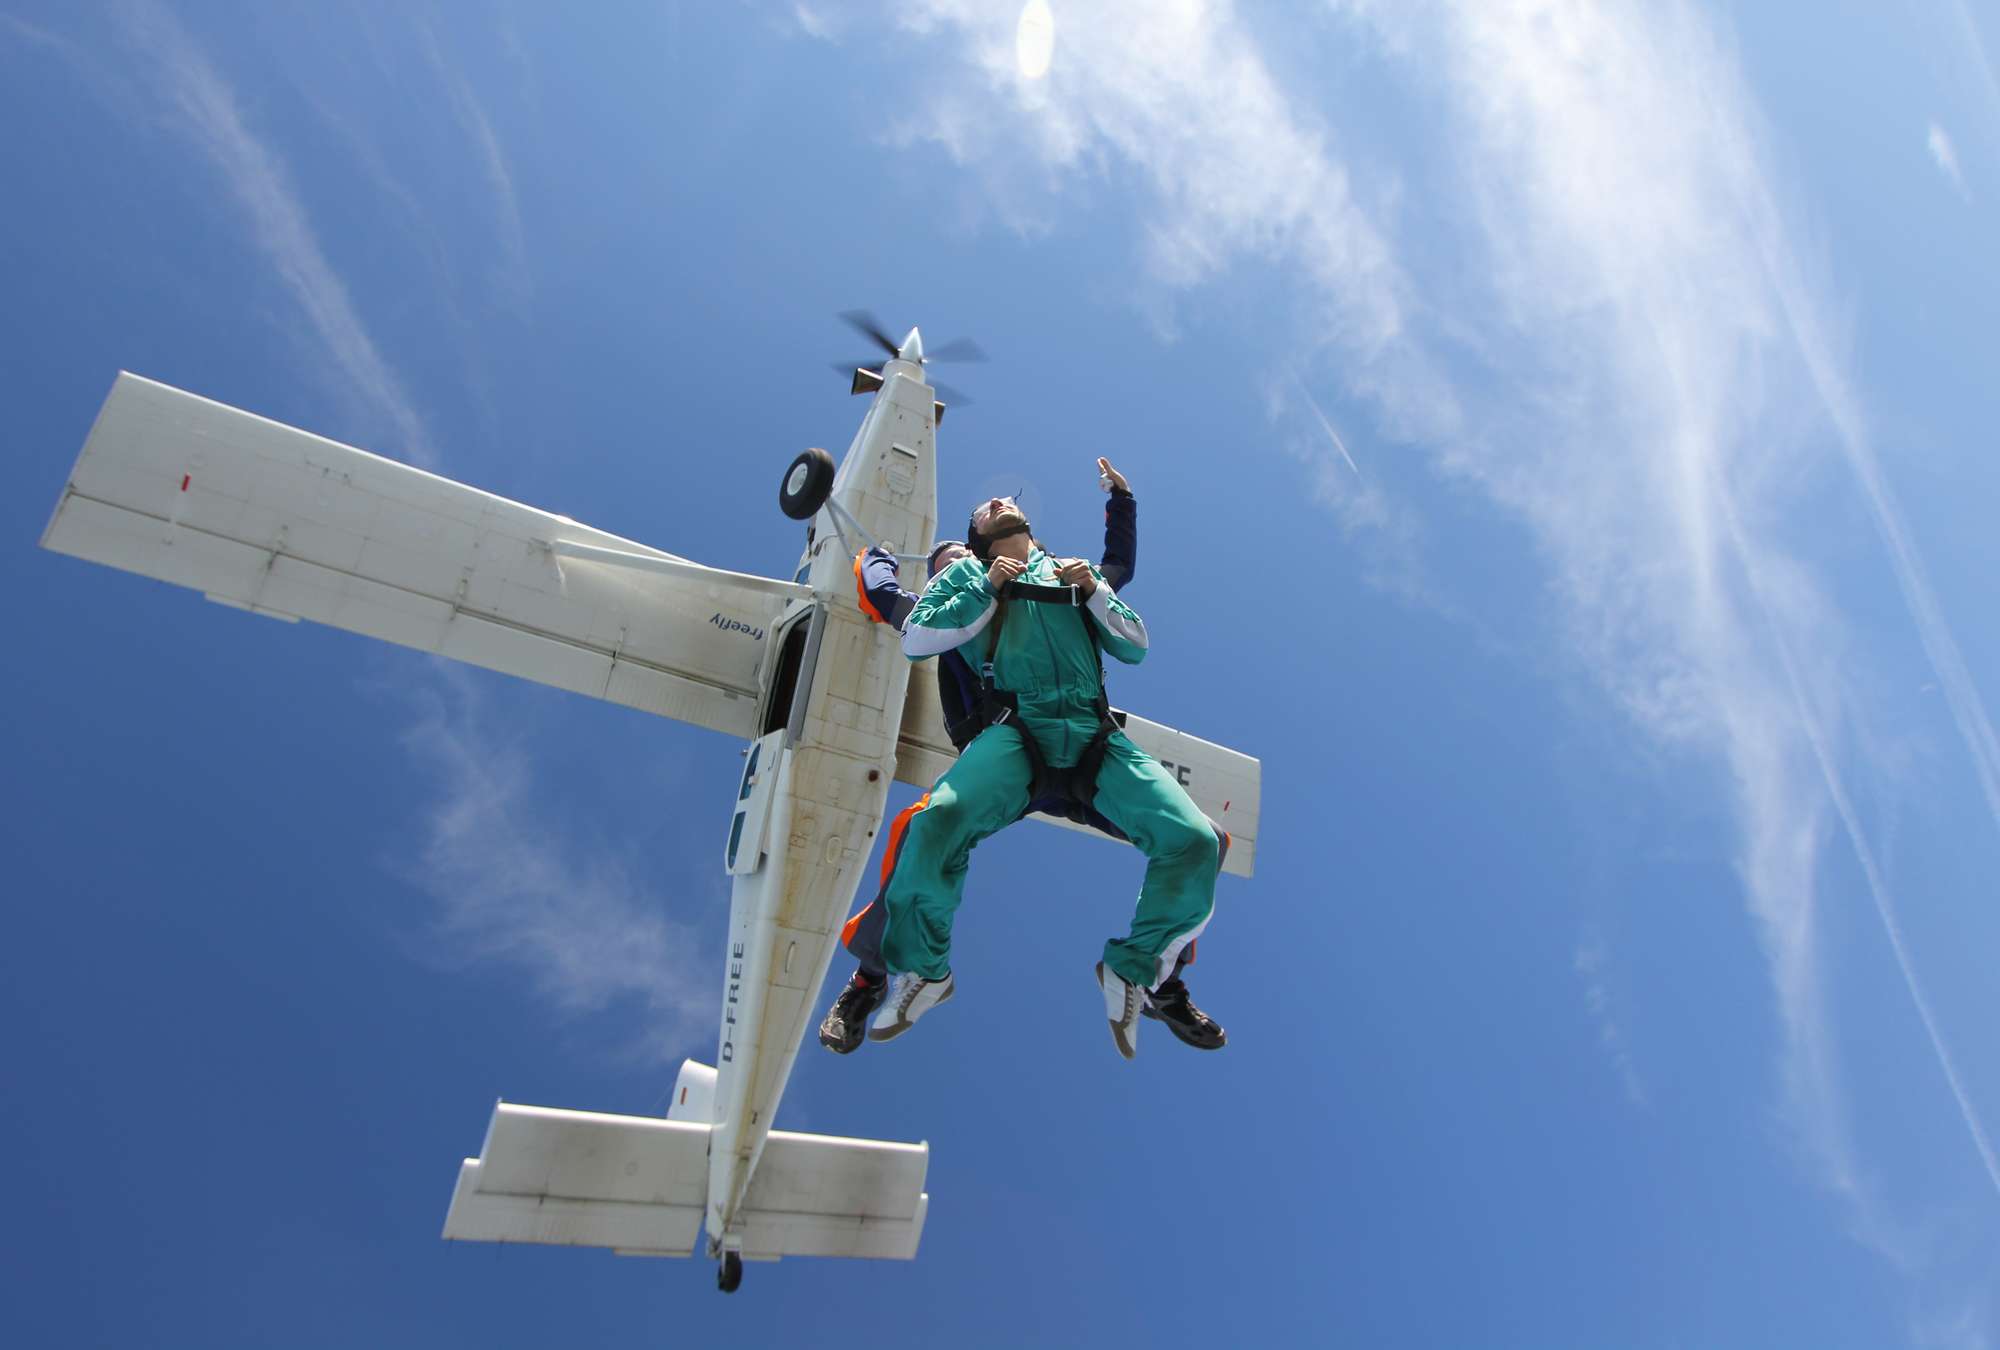             Parachute - photo wallpaper tandem jump & sky view
        